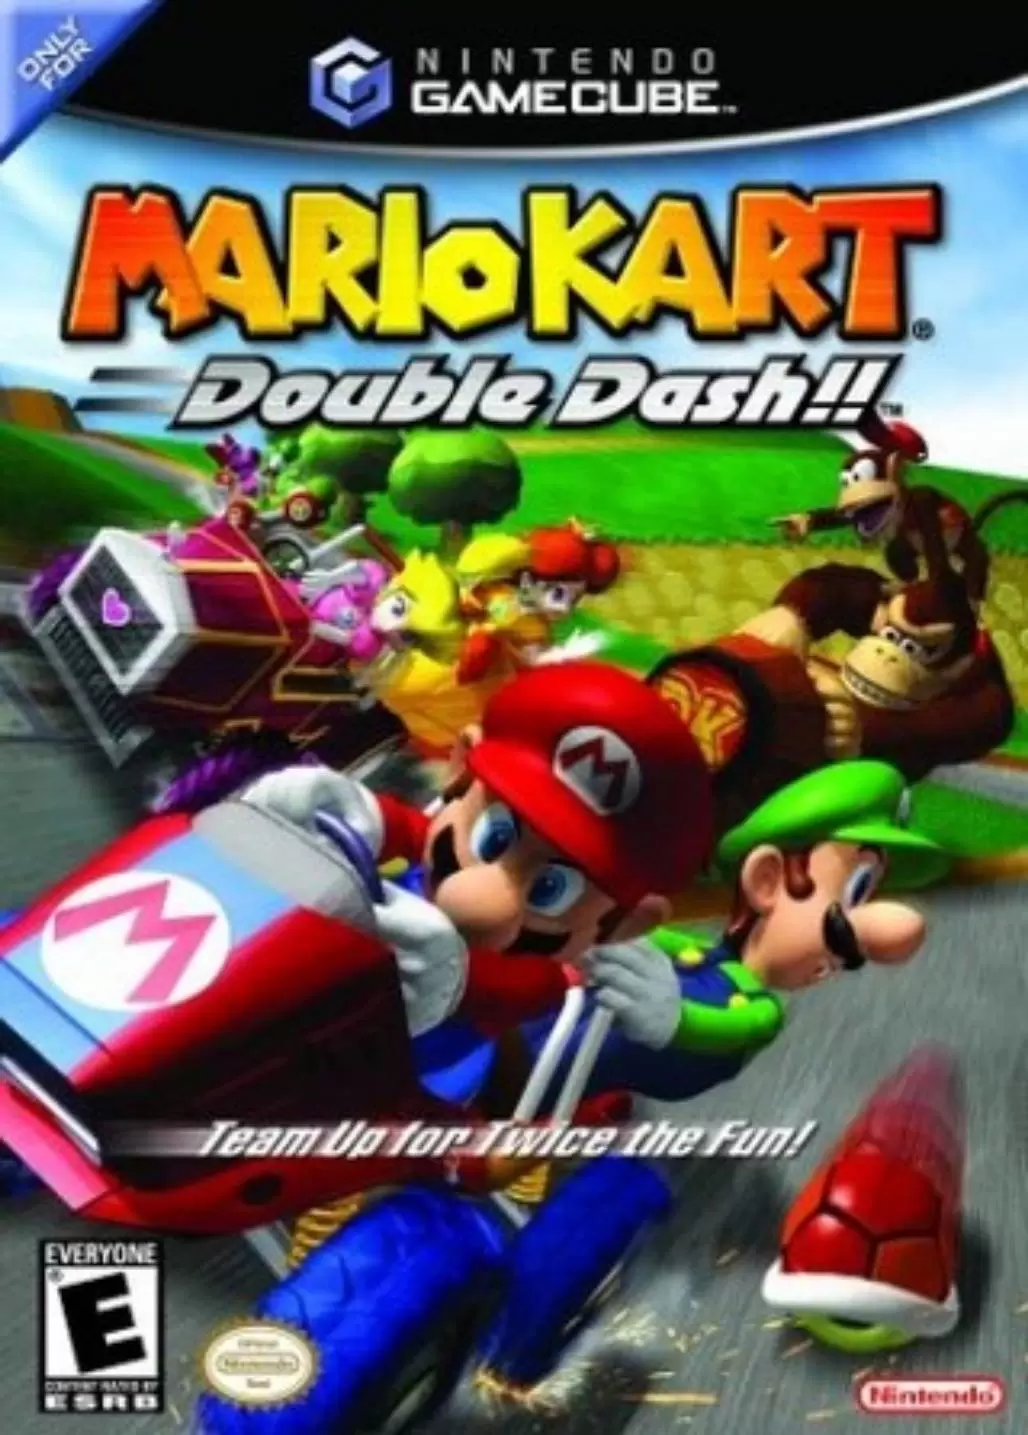 Nintendo Gamecube Games - Mario Kart: Double Dash!!